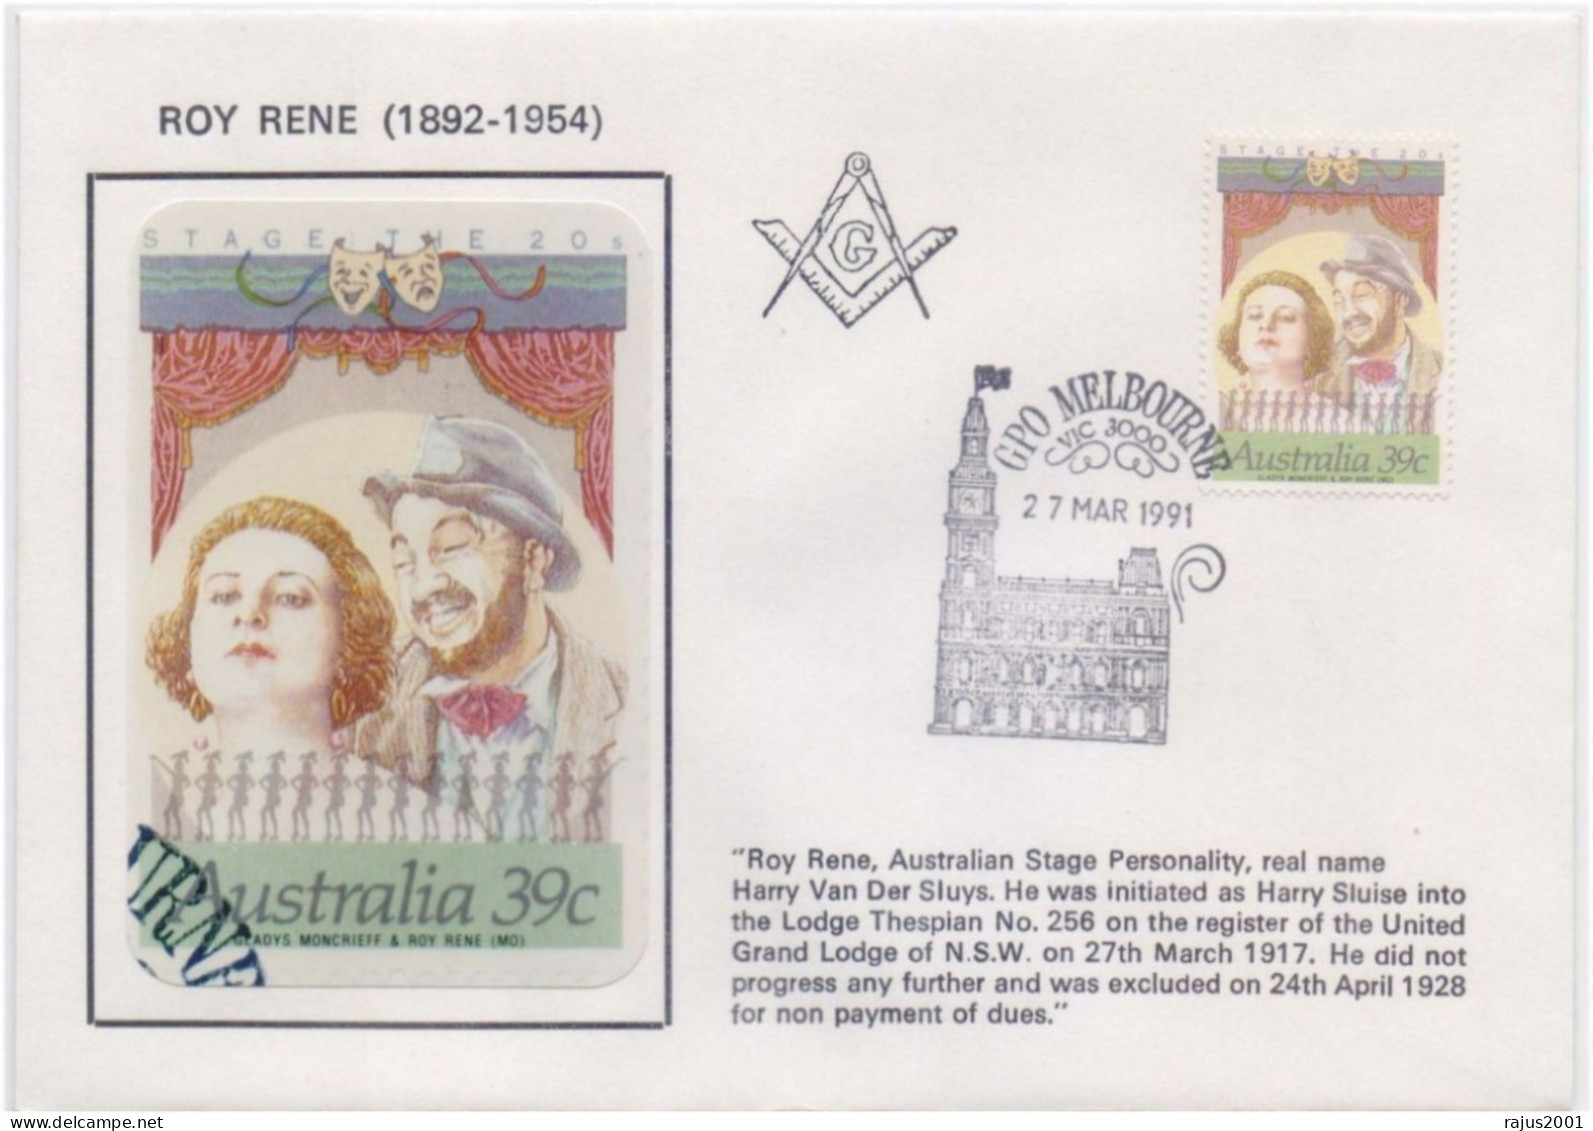 Roy Rene Australian Stage Personality, Thespian Lodge No. 256, Grand Lodge Of N.S.W. Couple, Freemasonry, Masonic Cover - Vrijmetselarij